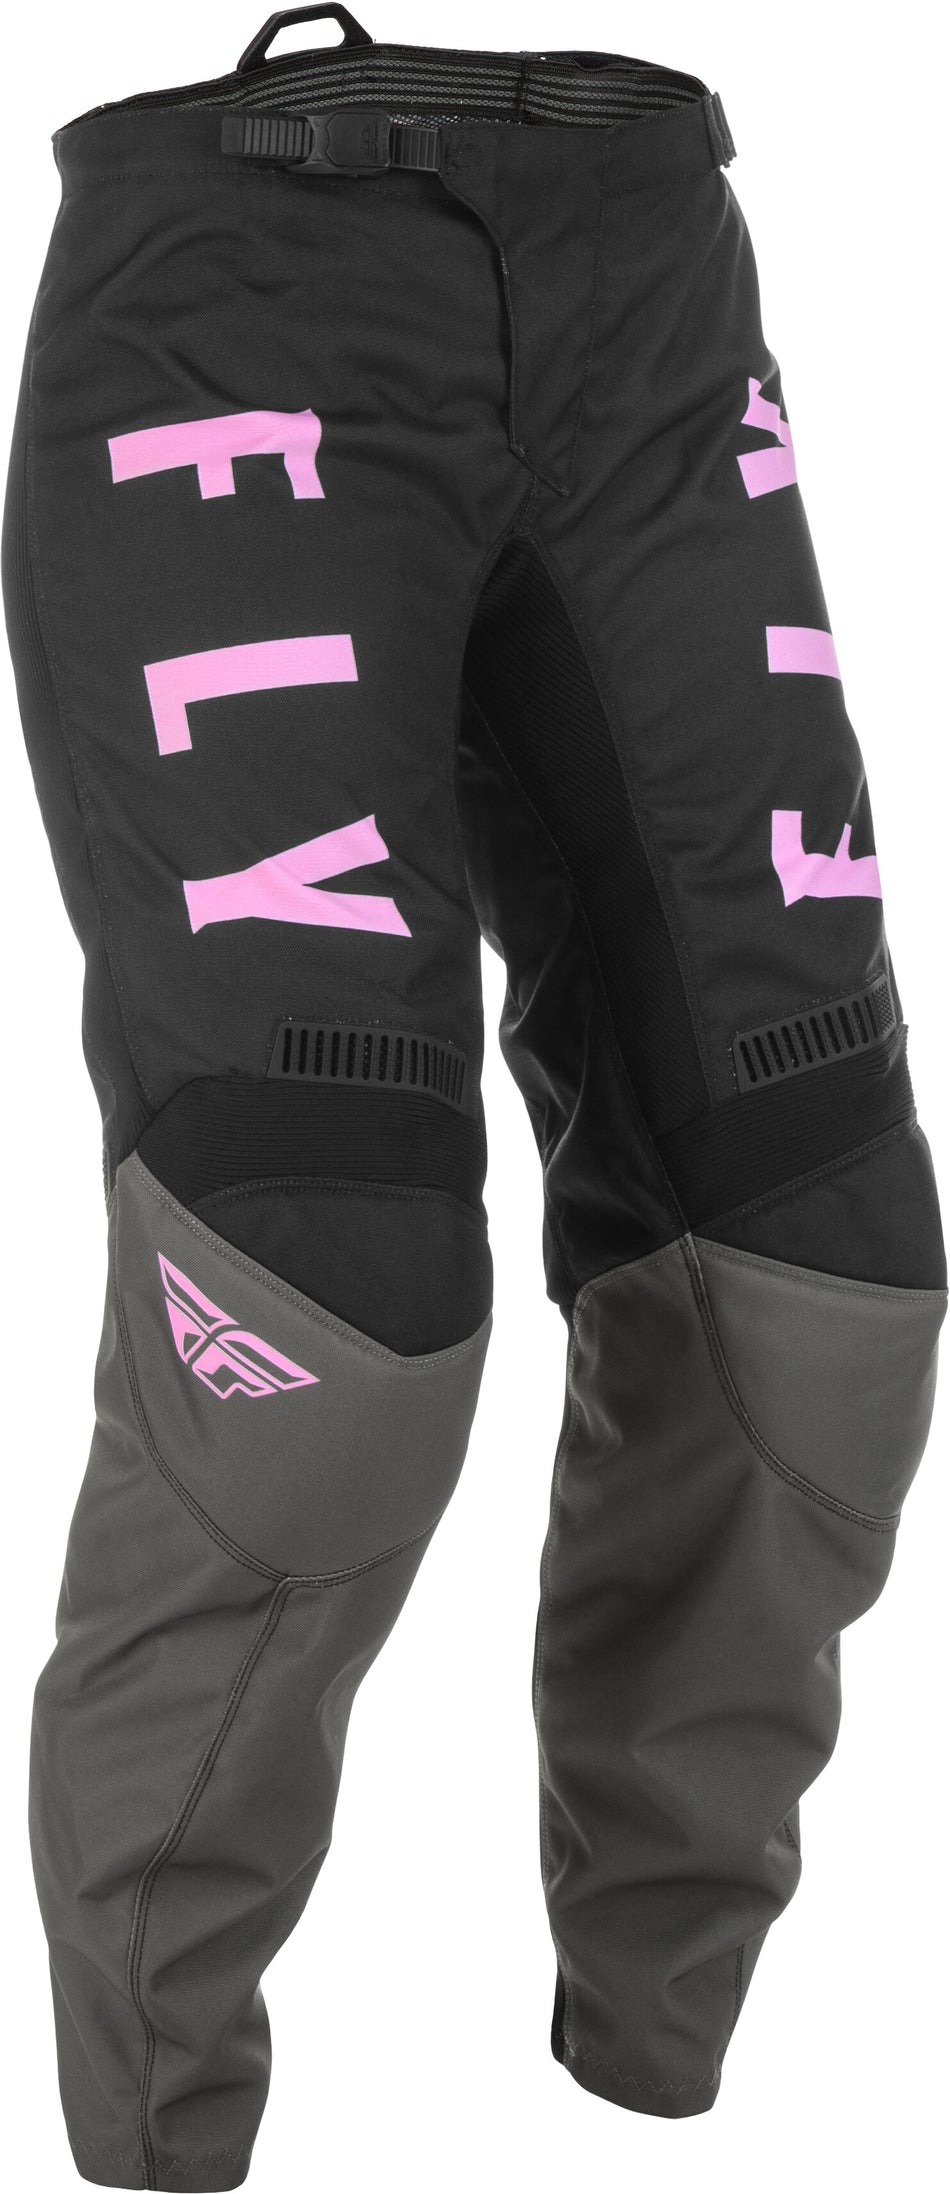 FLY RACING Women's F-16 Pants Grey/Black/Pink Sz 03/04 375-83105